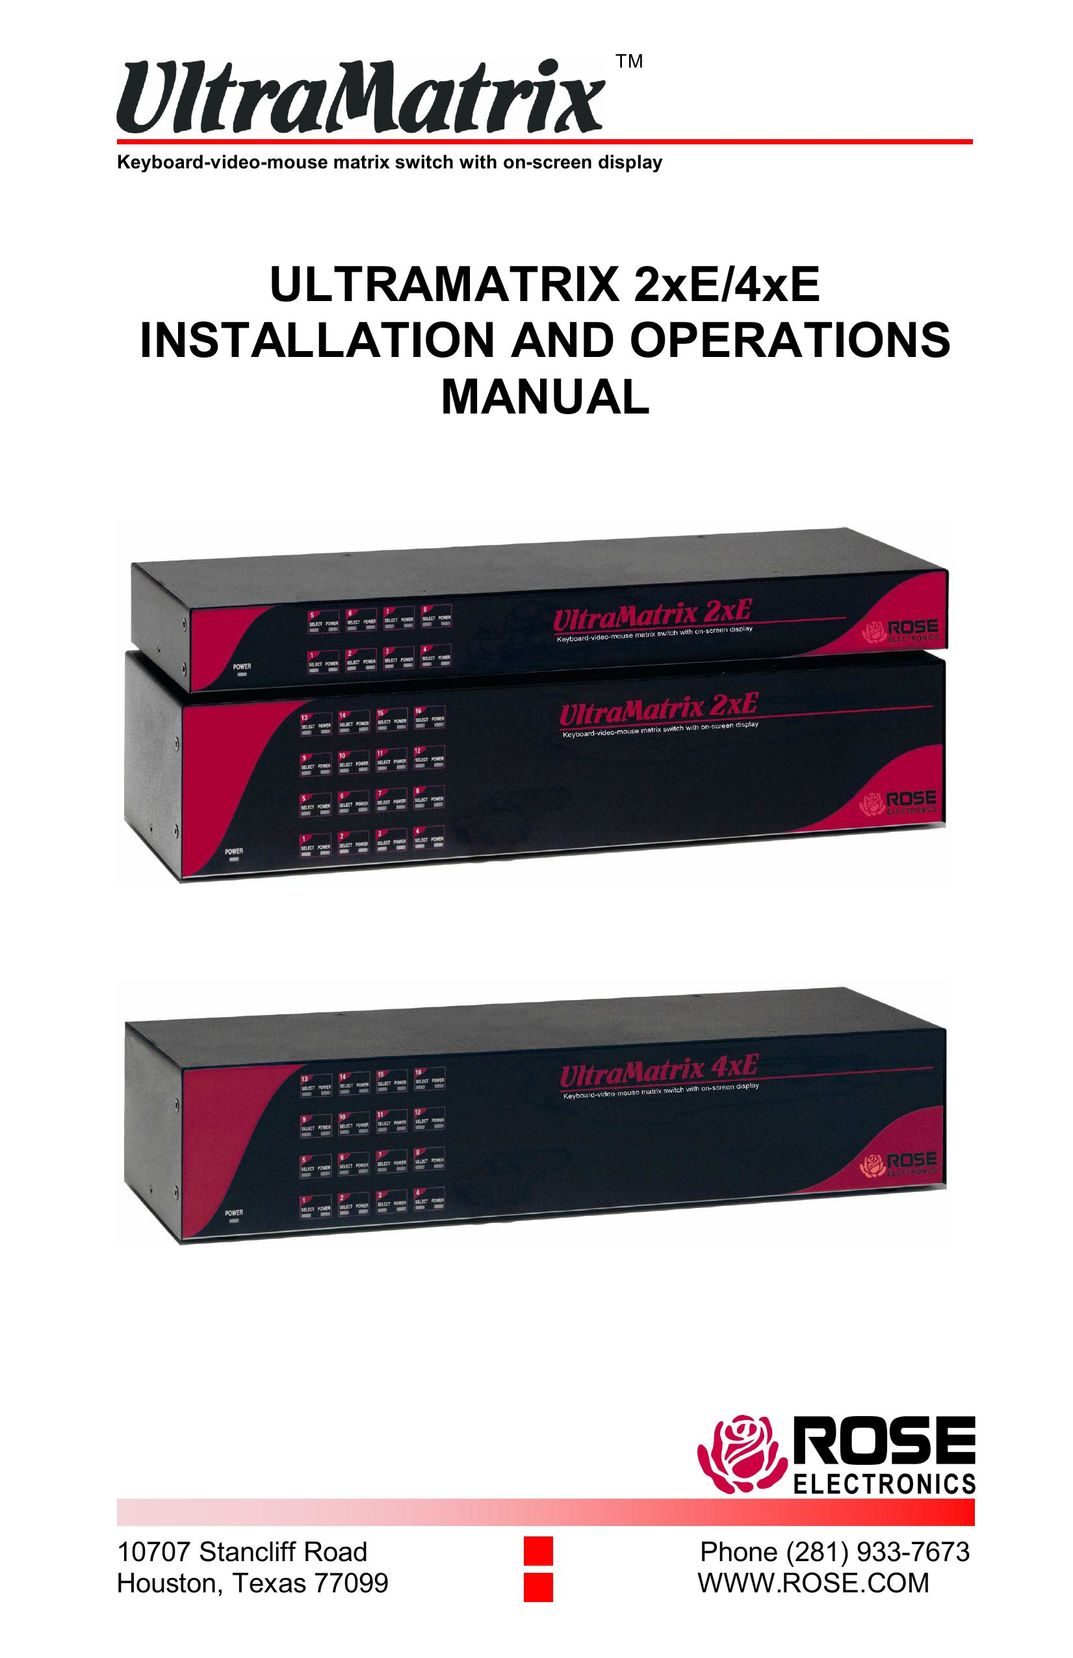 Rose electronic ULTRAMATRIX 2xE Switch User Manual